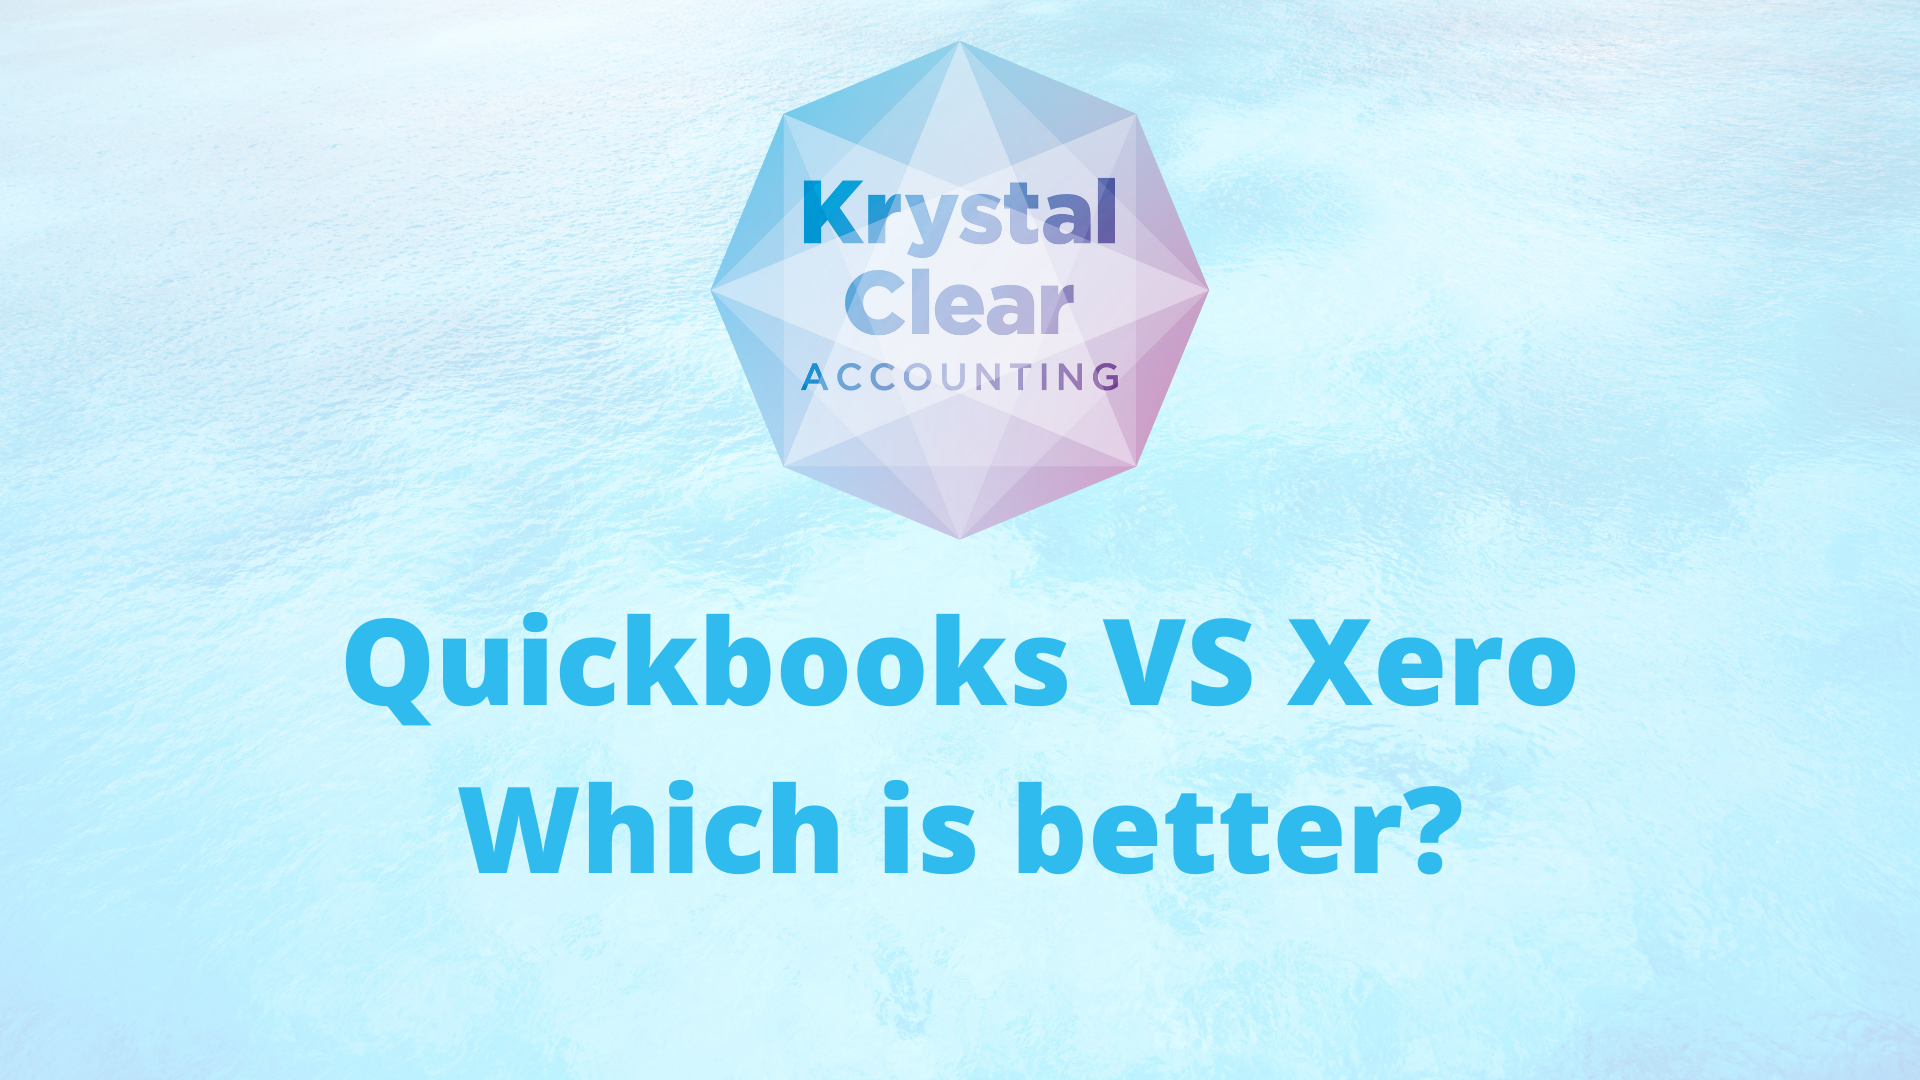 Quickbooks or Xero